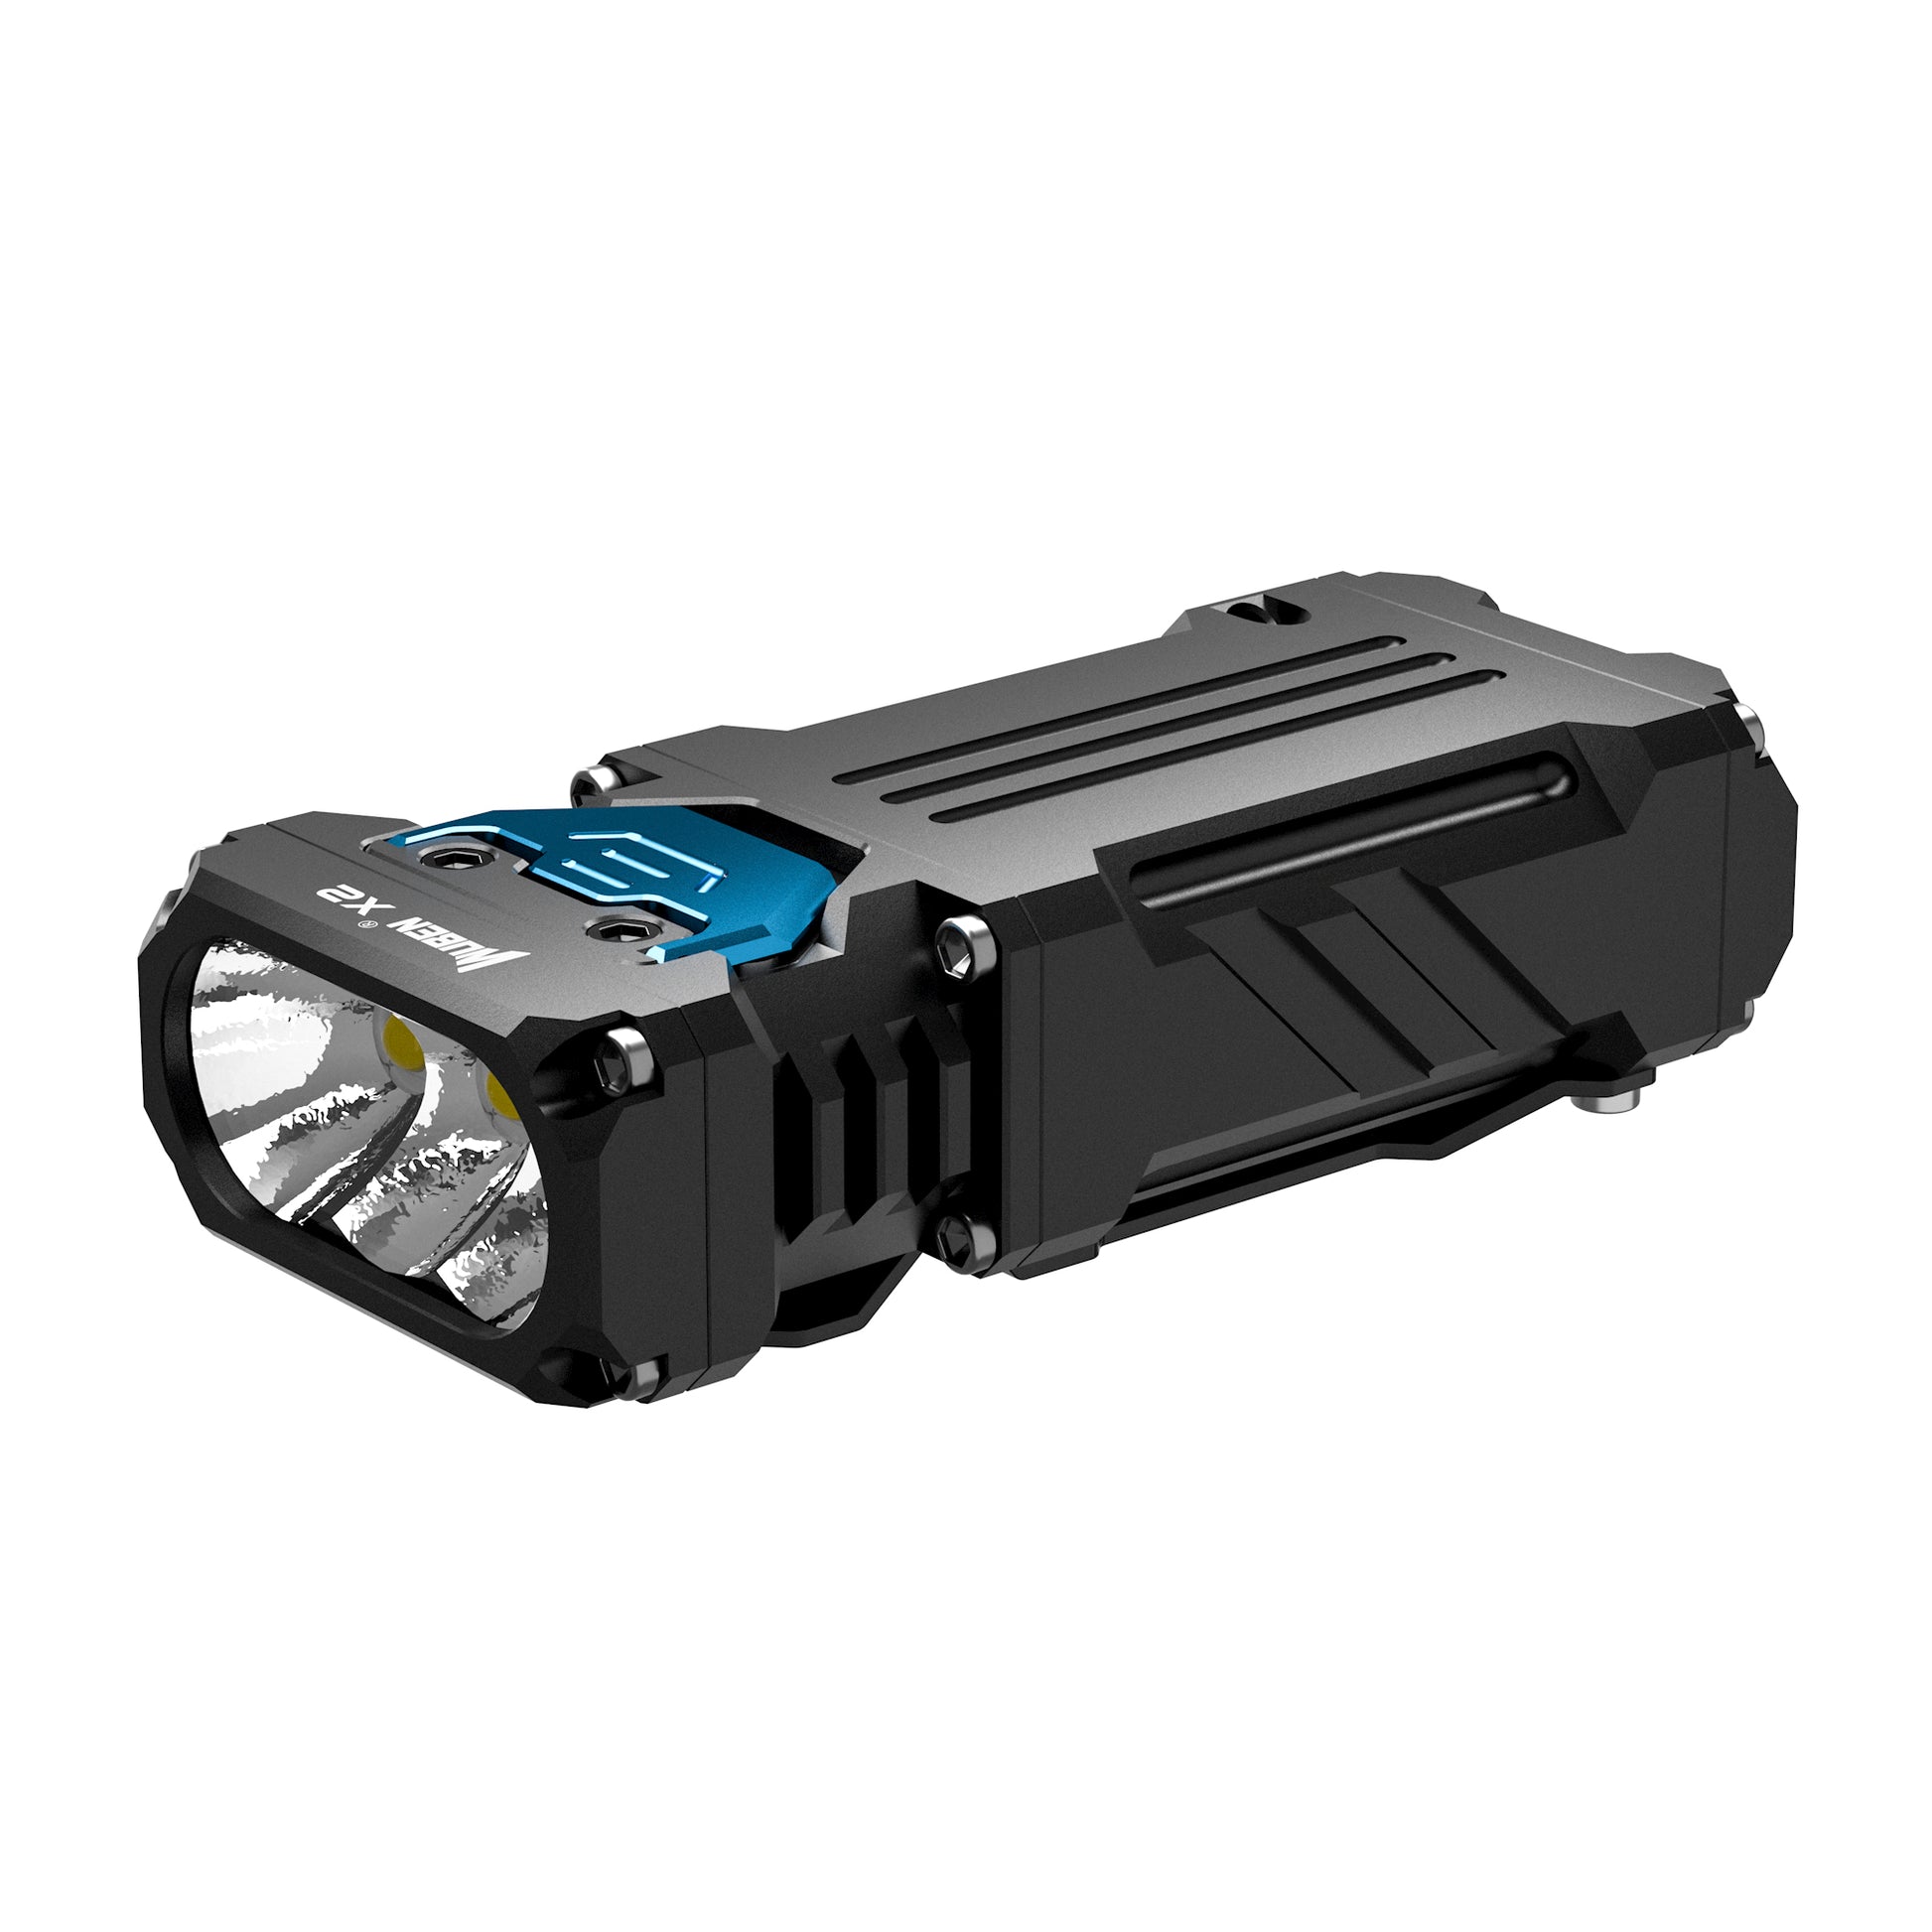 Wuben C3 1200 Lumens Easy Carry Light – GadgetConnections